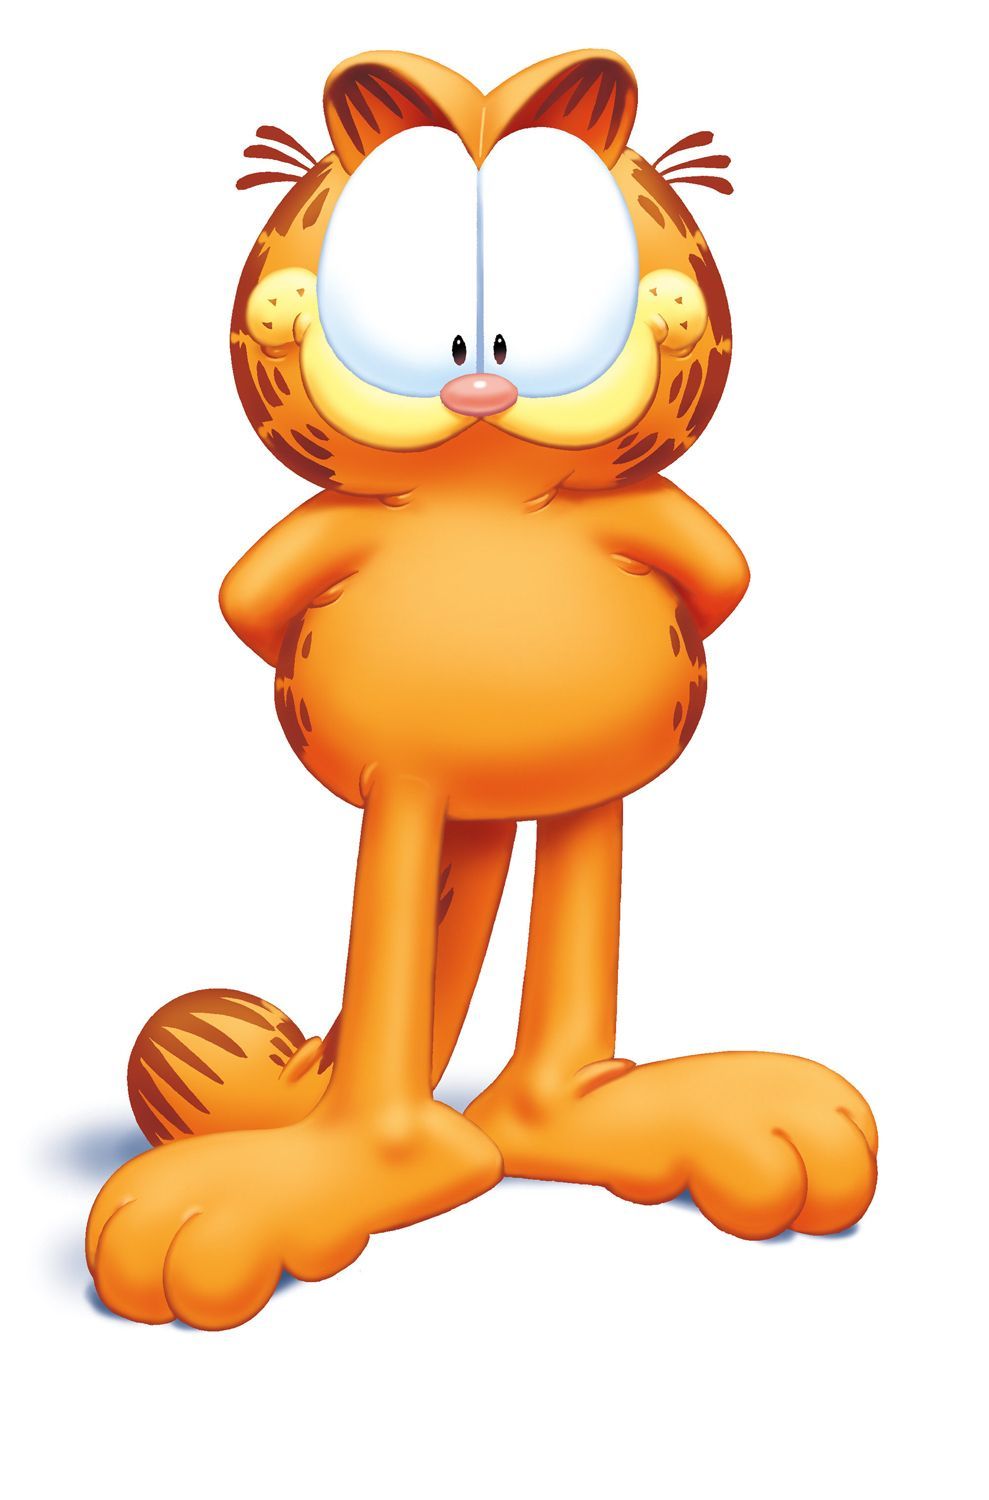 Garfield The Cat Wallpaper